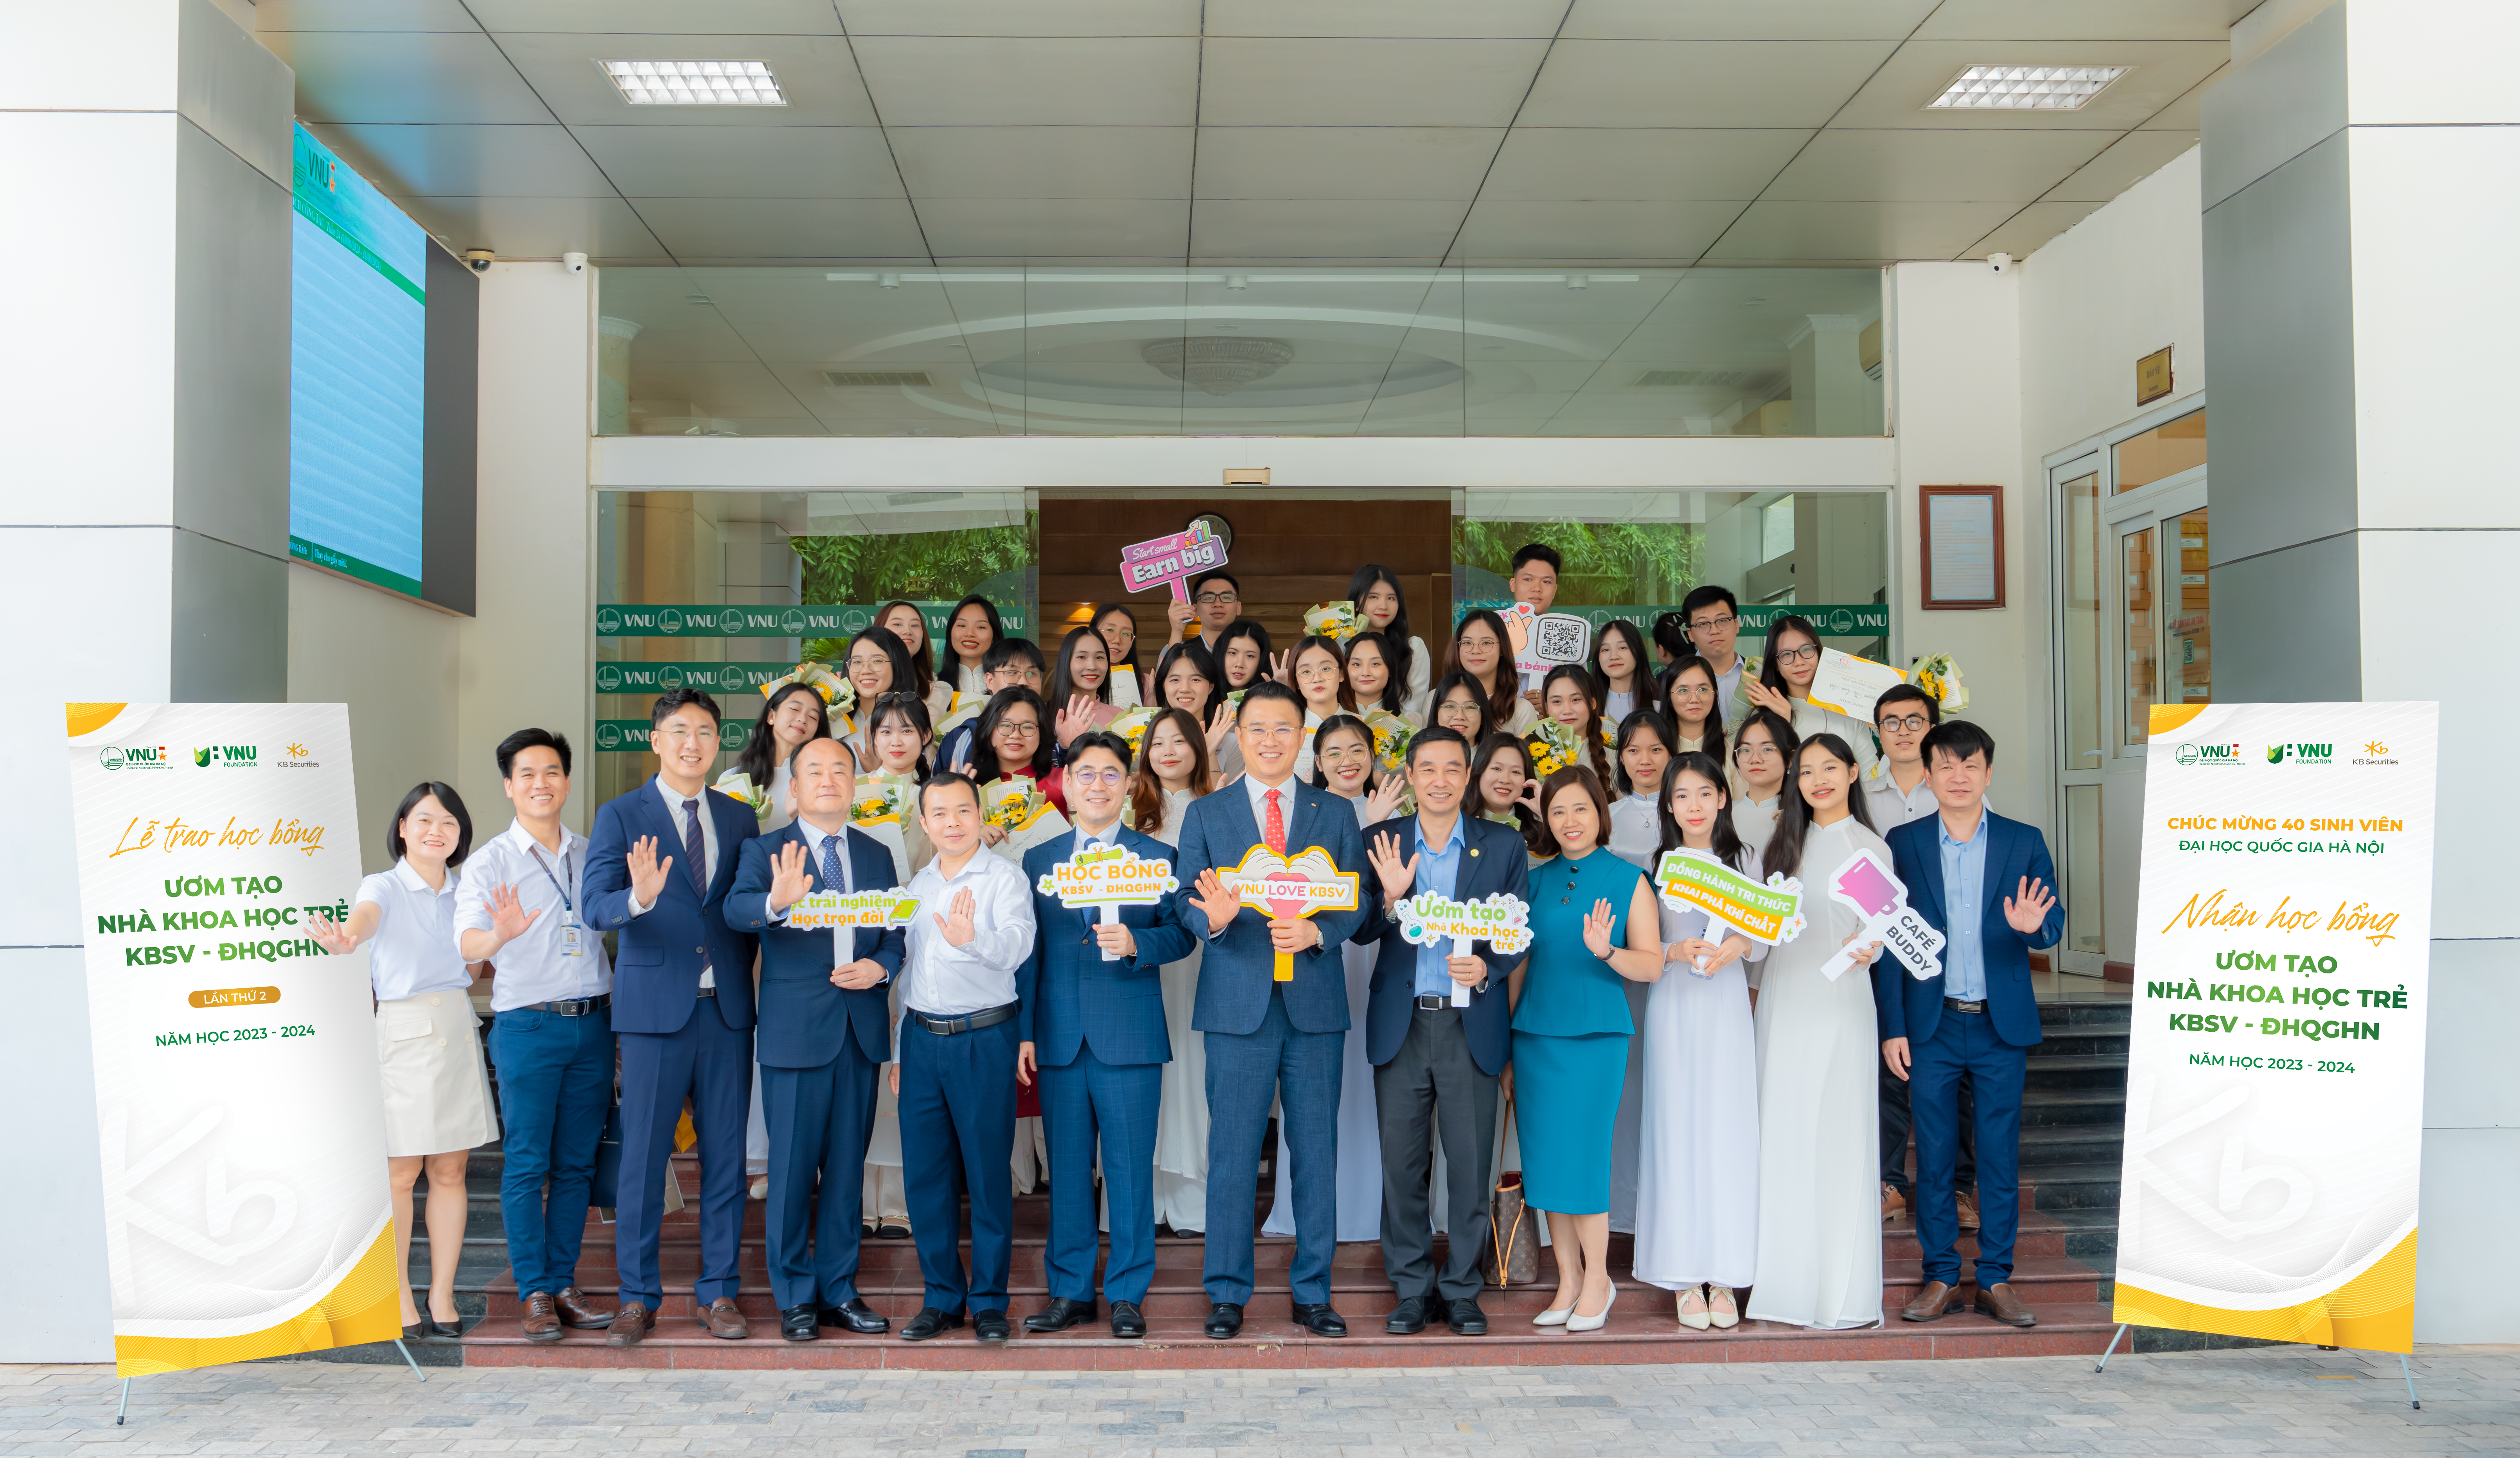 KB Securities Vietnam awarded scholarships totaling 1 billion VND to students of Vietnam National University, Hanoi.